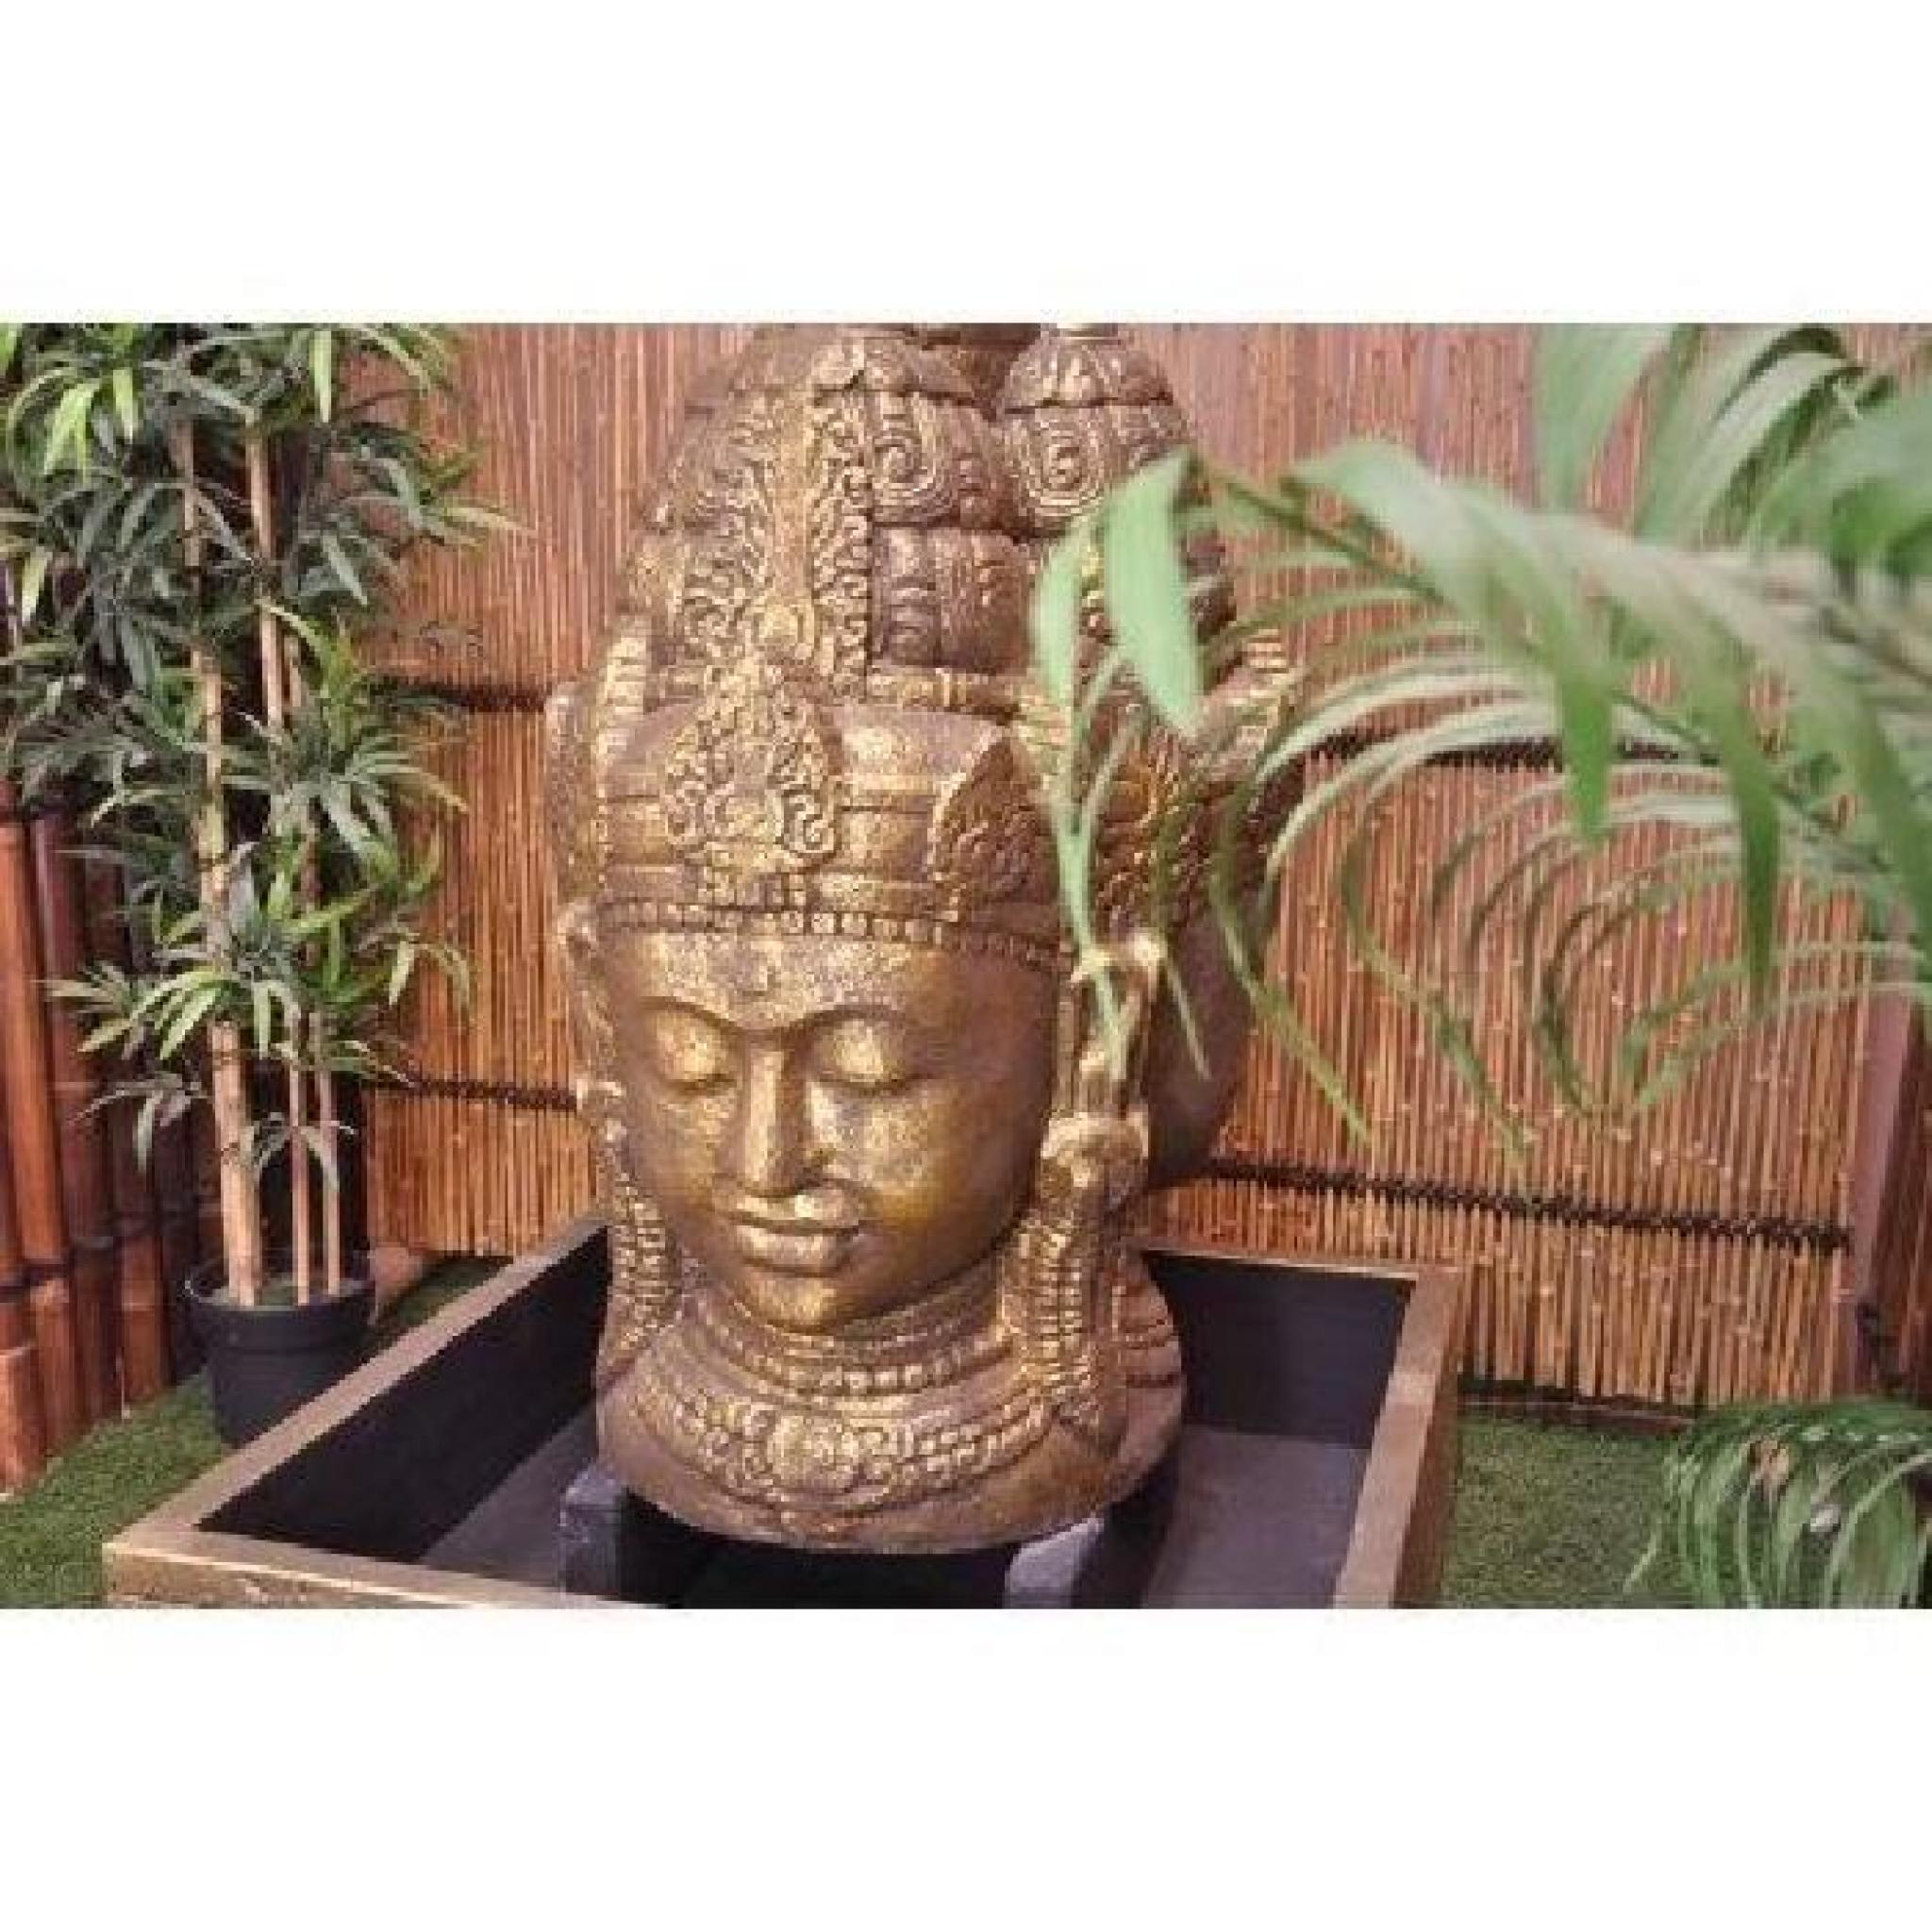 Fontaine de jardin visage de deesse Dewi 1.30cm doré.